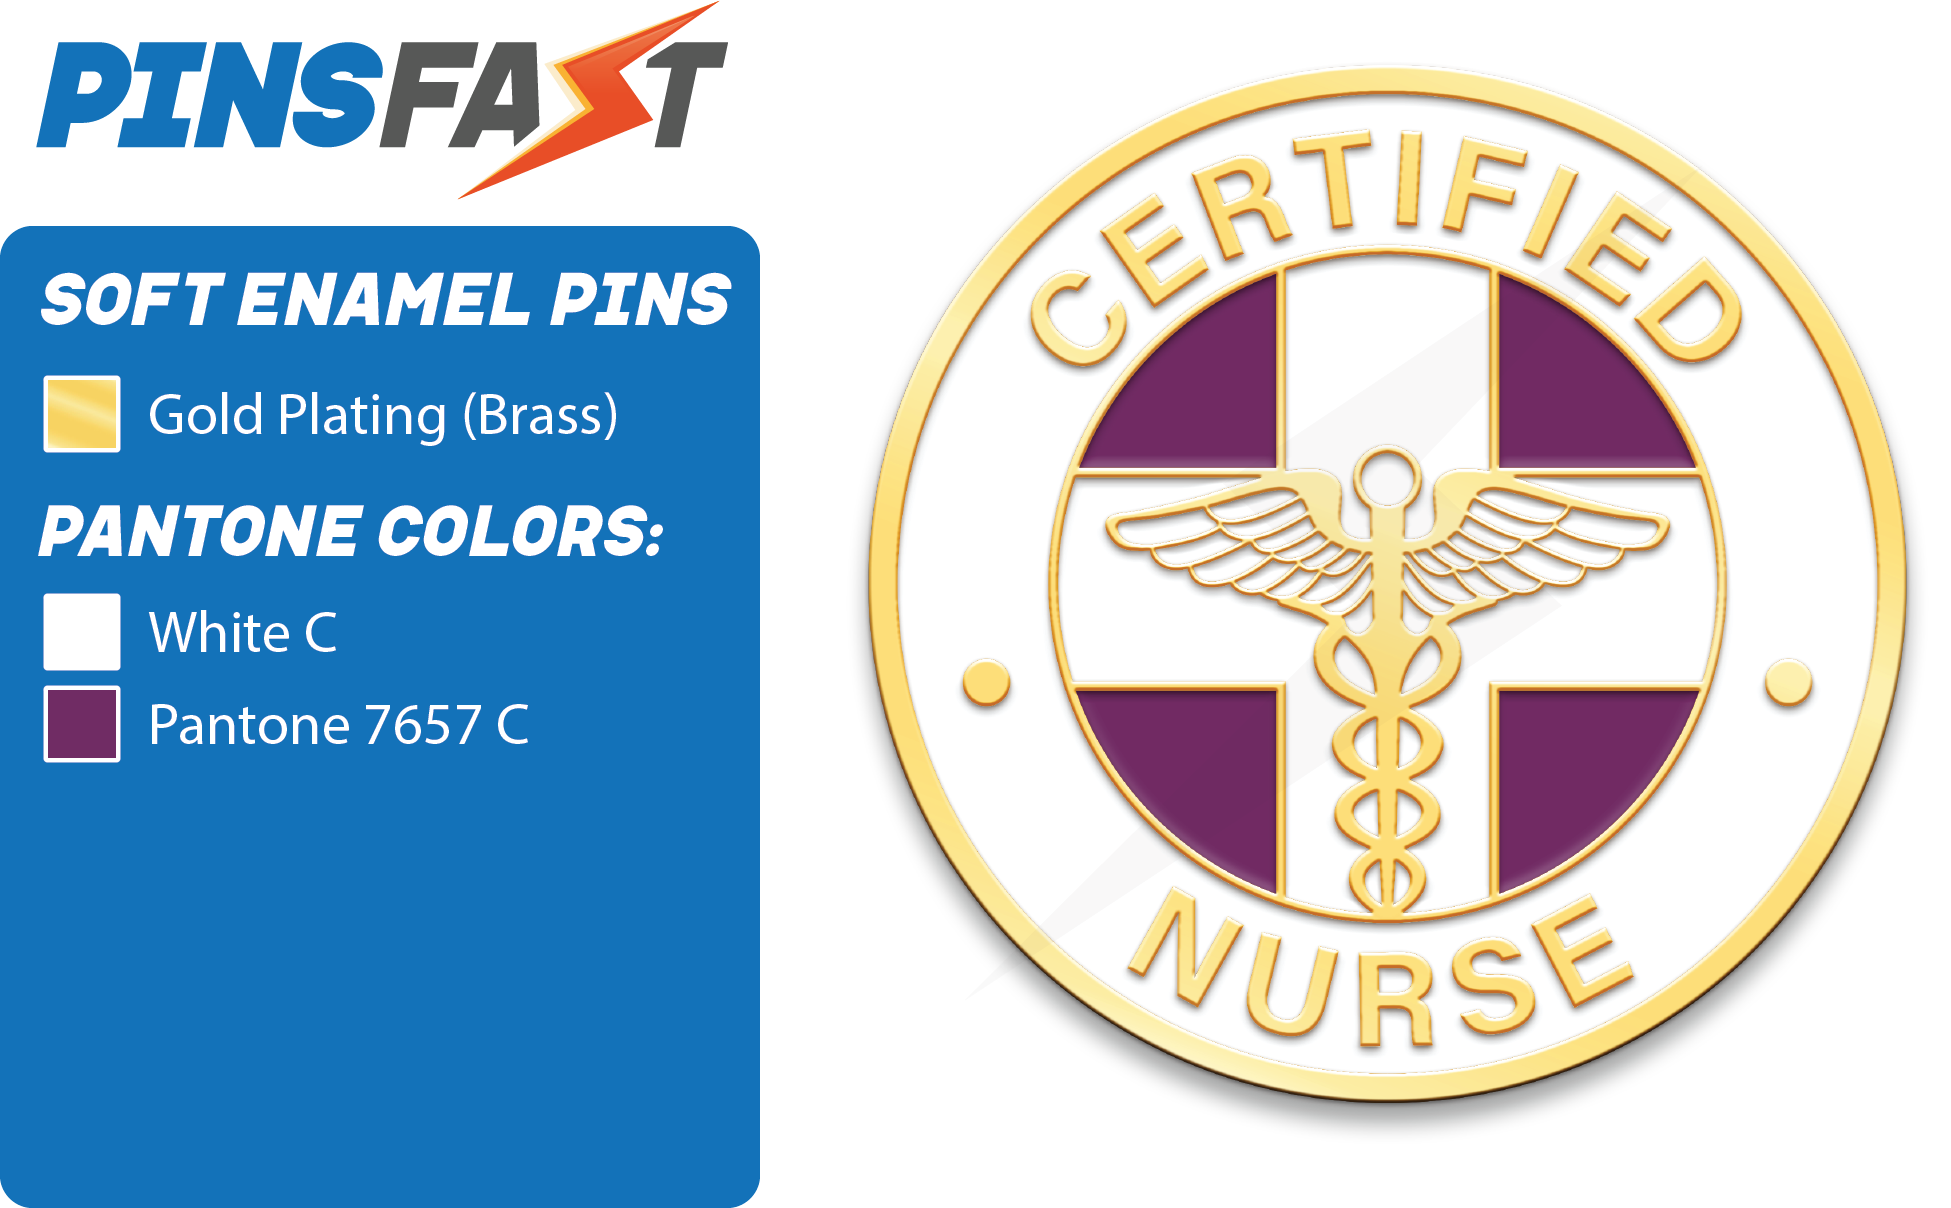 Certified Nurse Pins